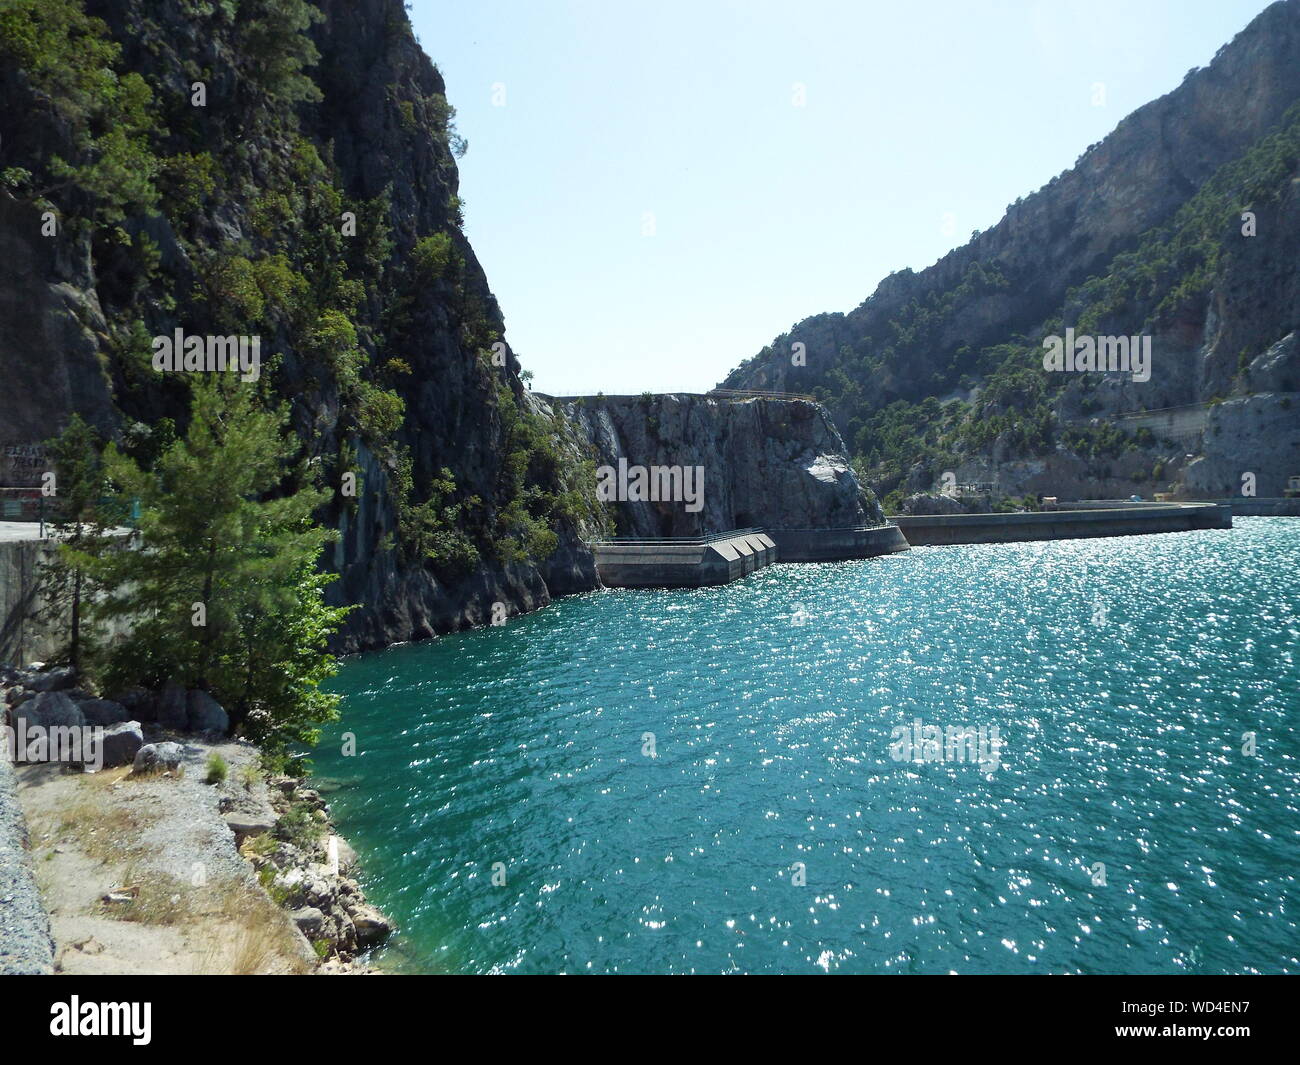 Oymapinar Dam Over Manavgat River Stock Photo